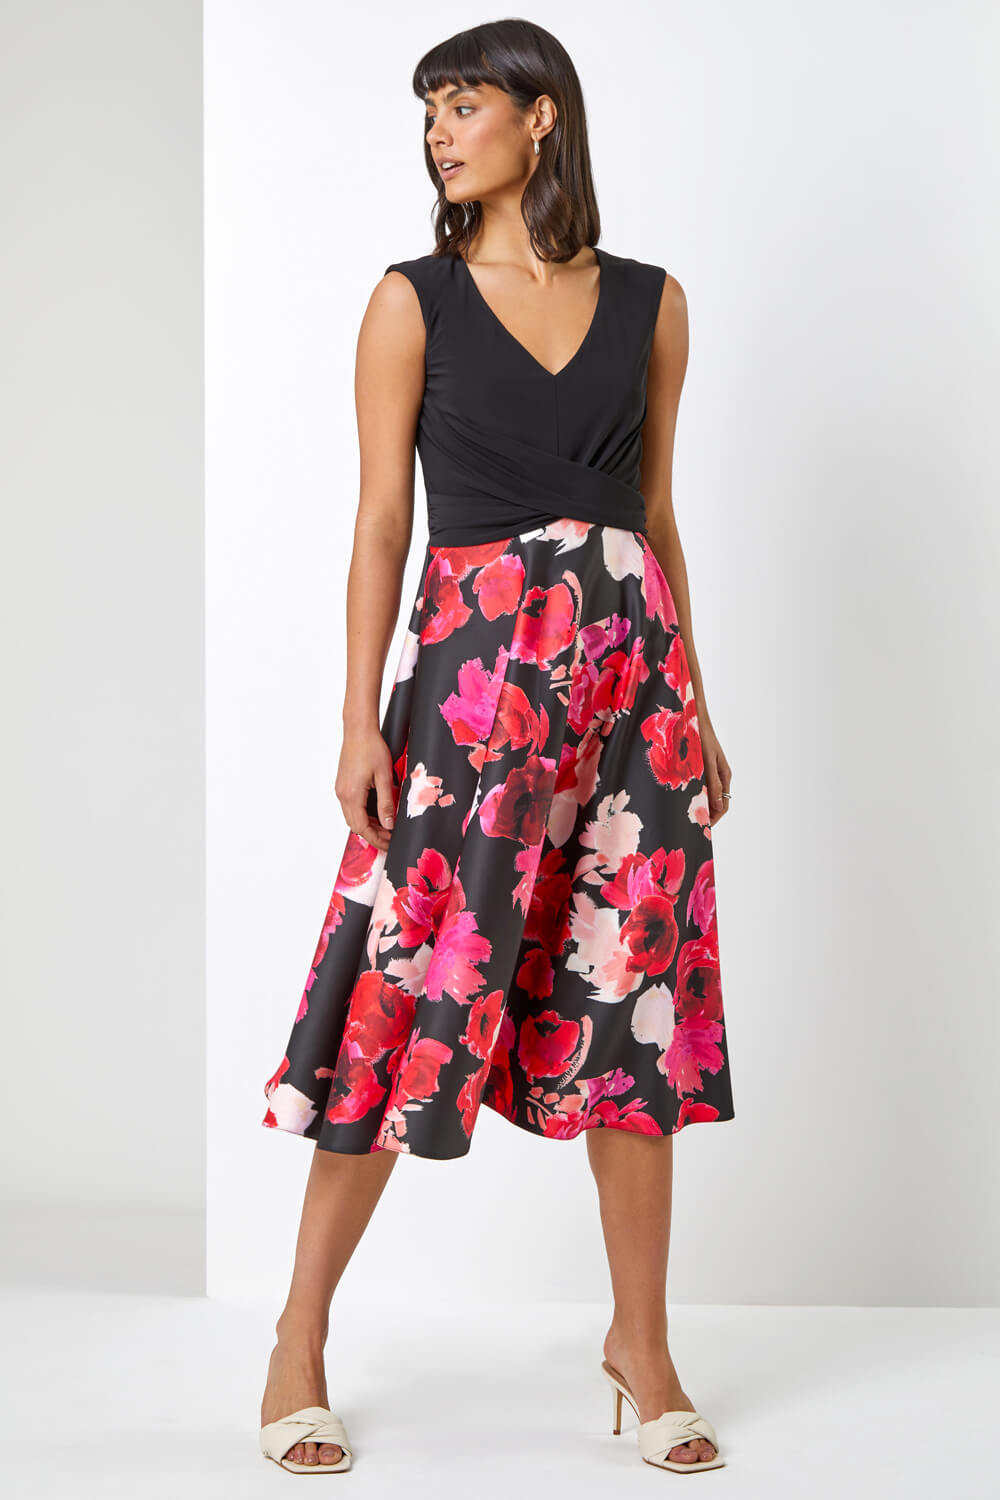 Black Floral Print Twist Detail Fit & Flare Dress, Image 3 of 5